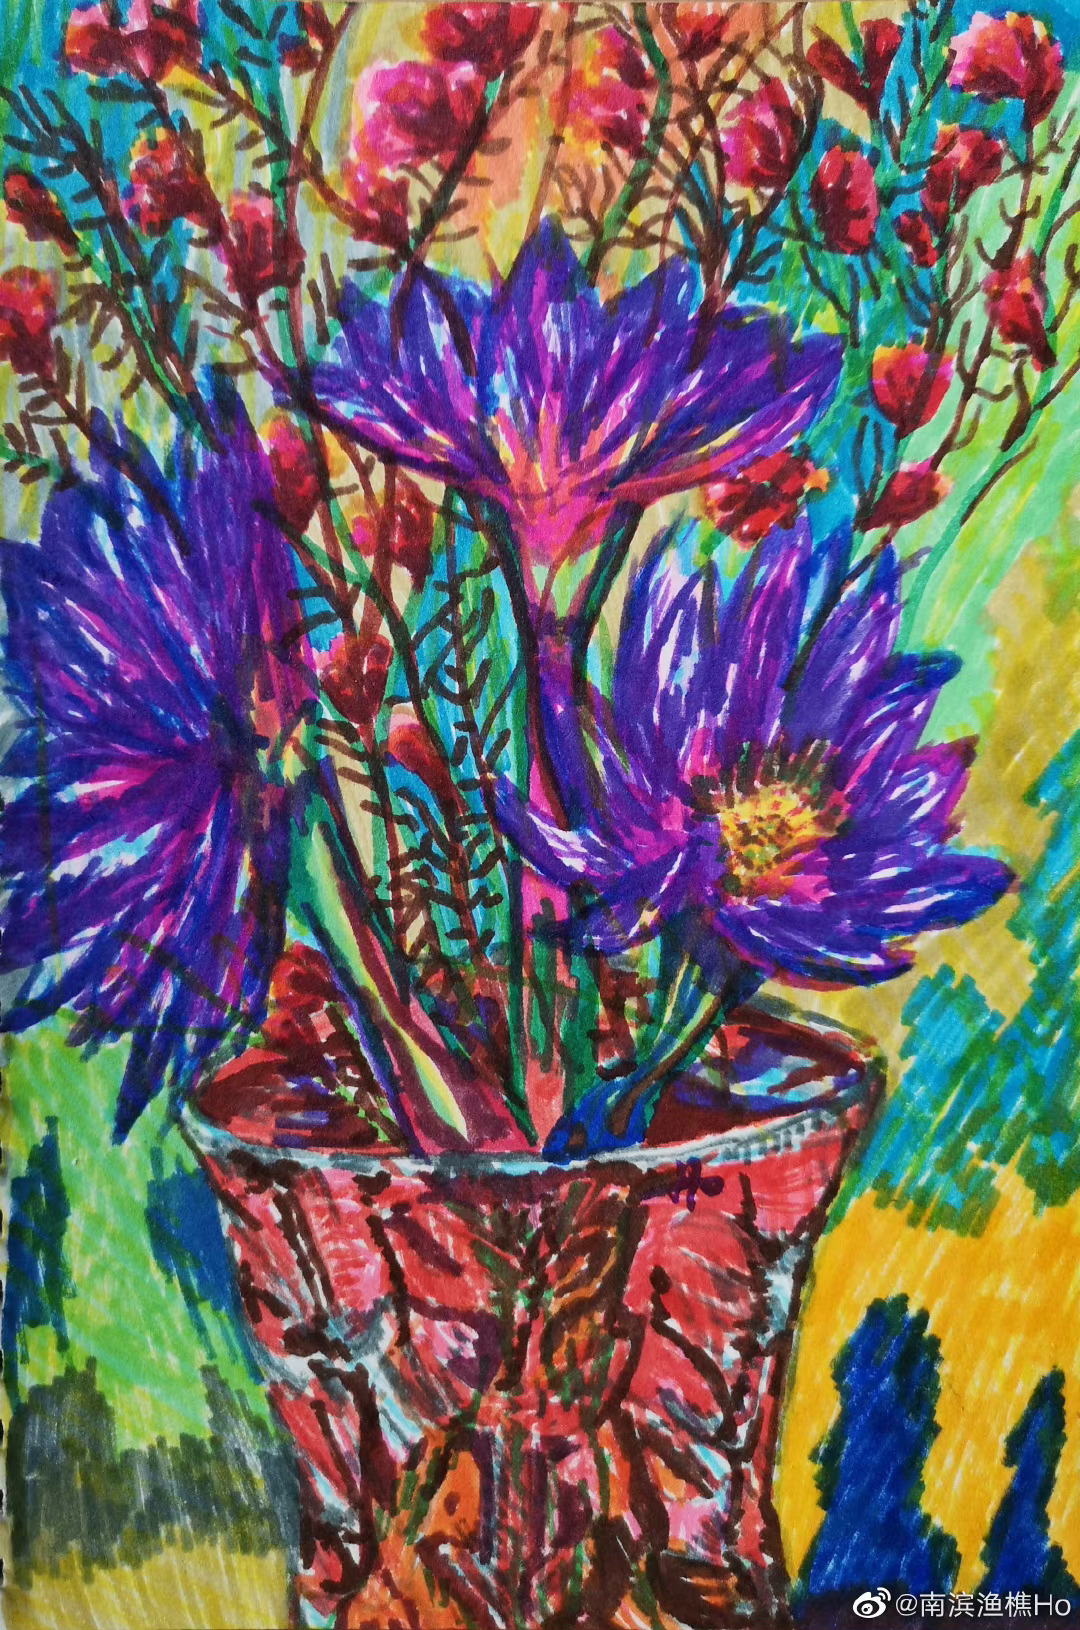 Lotus Plant Impressionism Watercolor Painting FishermanHo Portrait Display Artwork 1080x1630